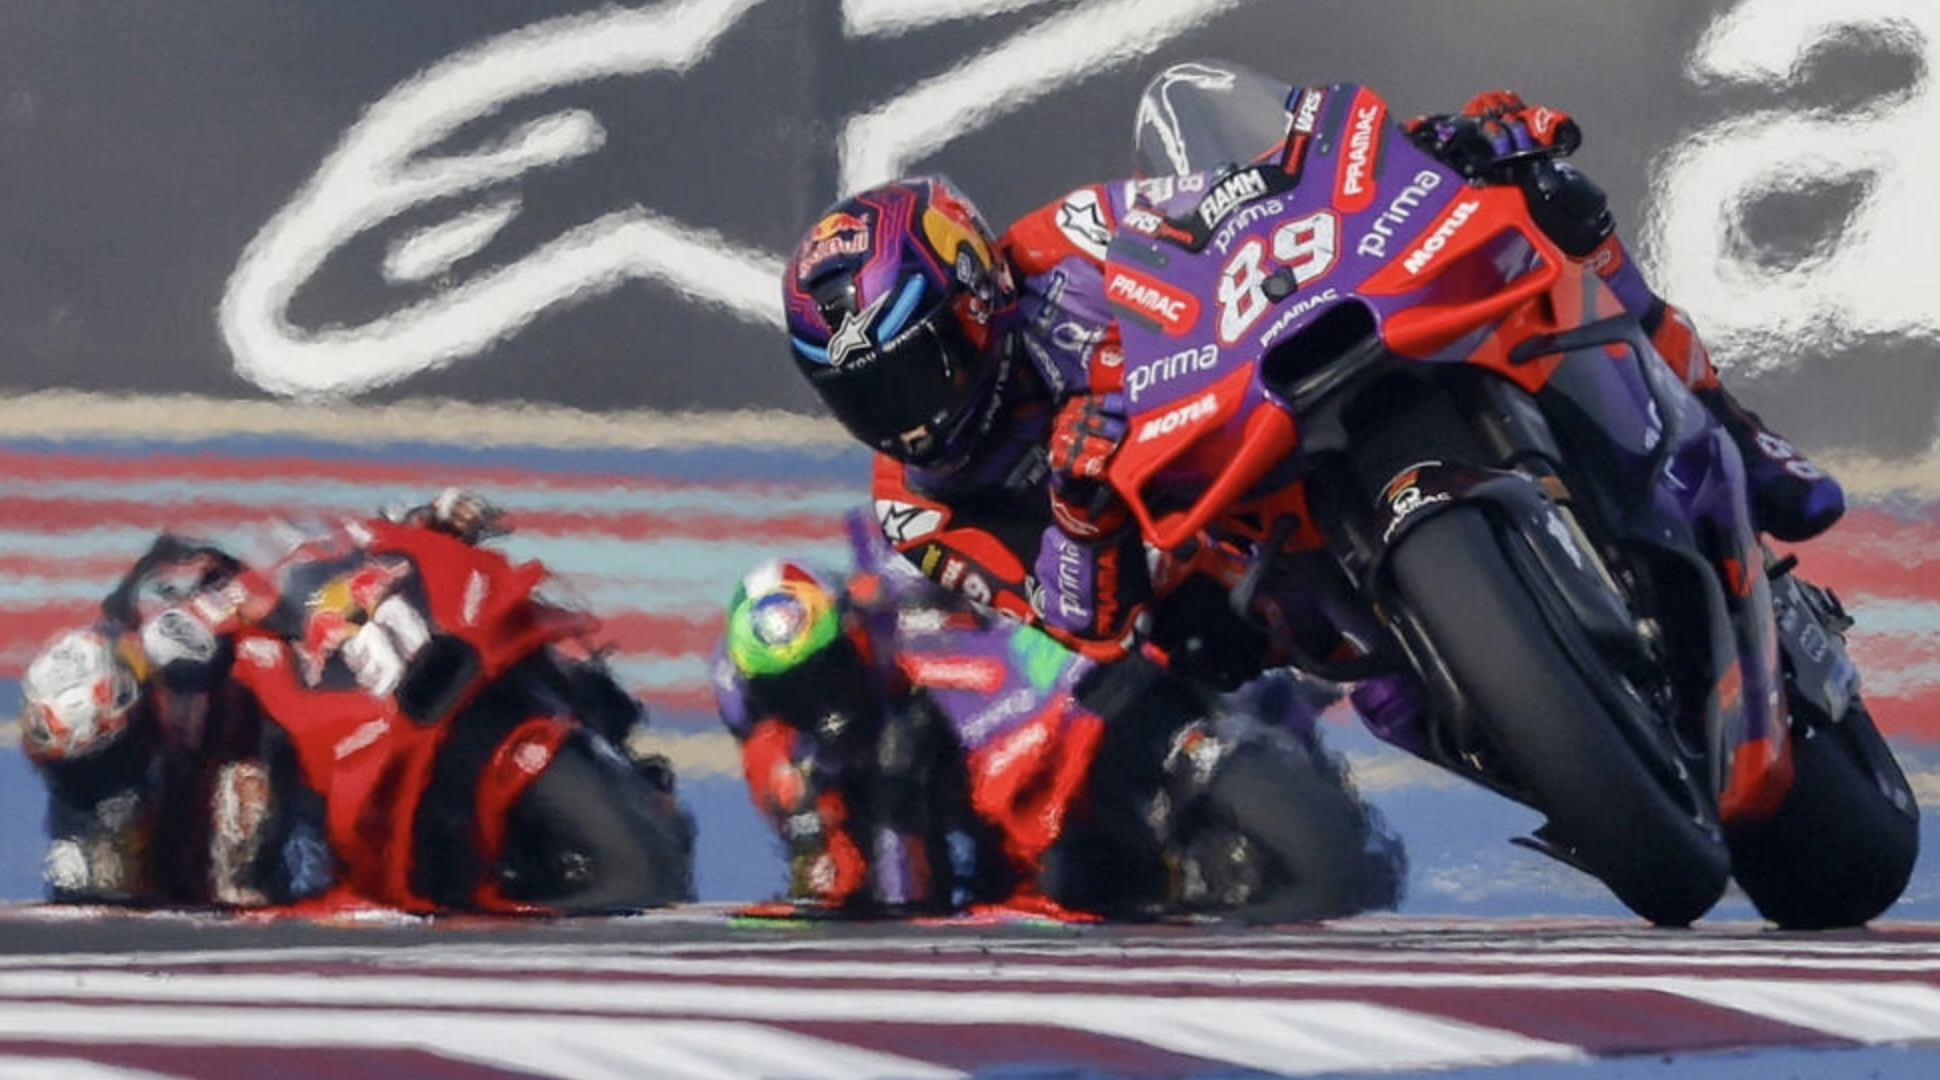 Spain's Martin takes pole for Qatar MotoGP, Bagnaia on second row